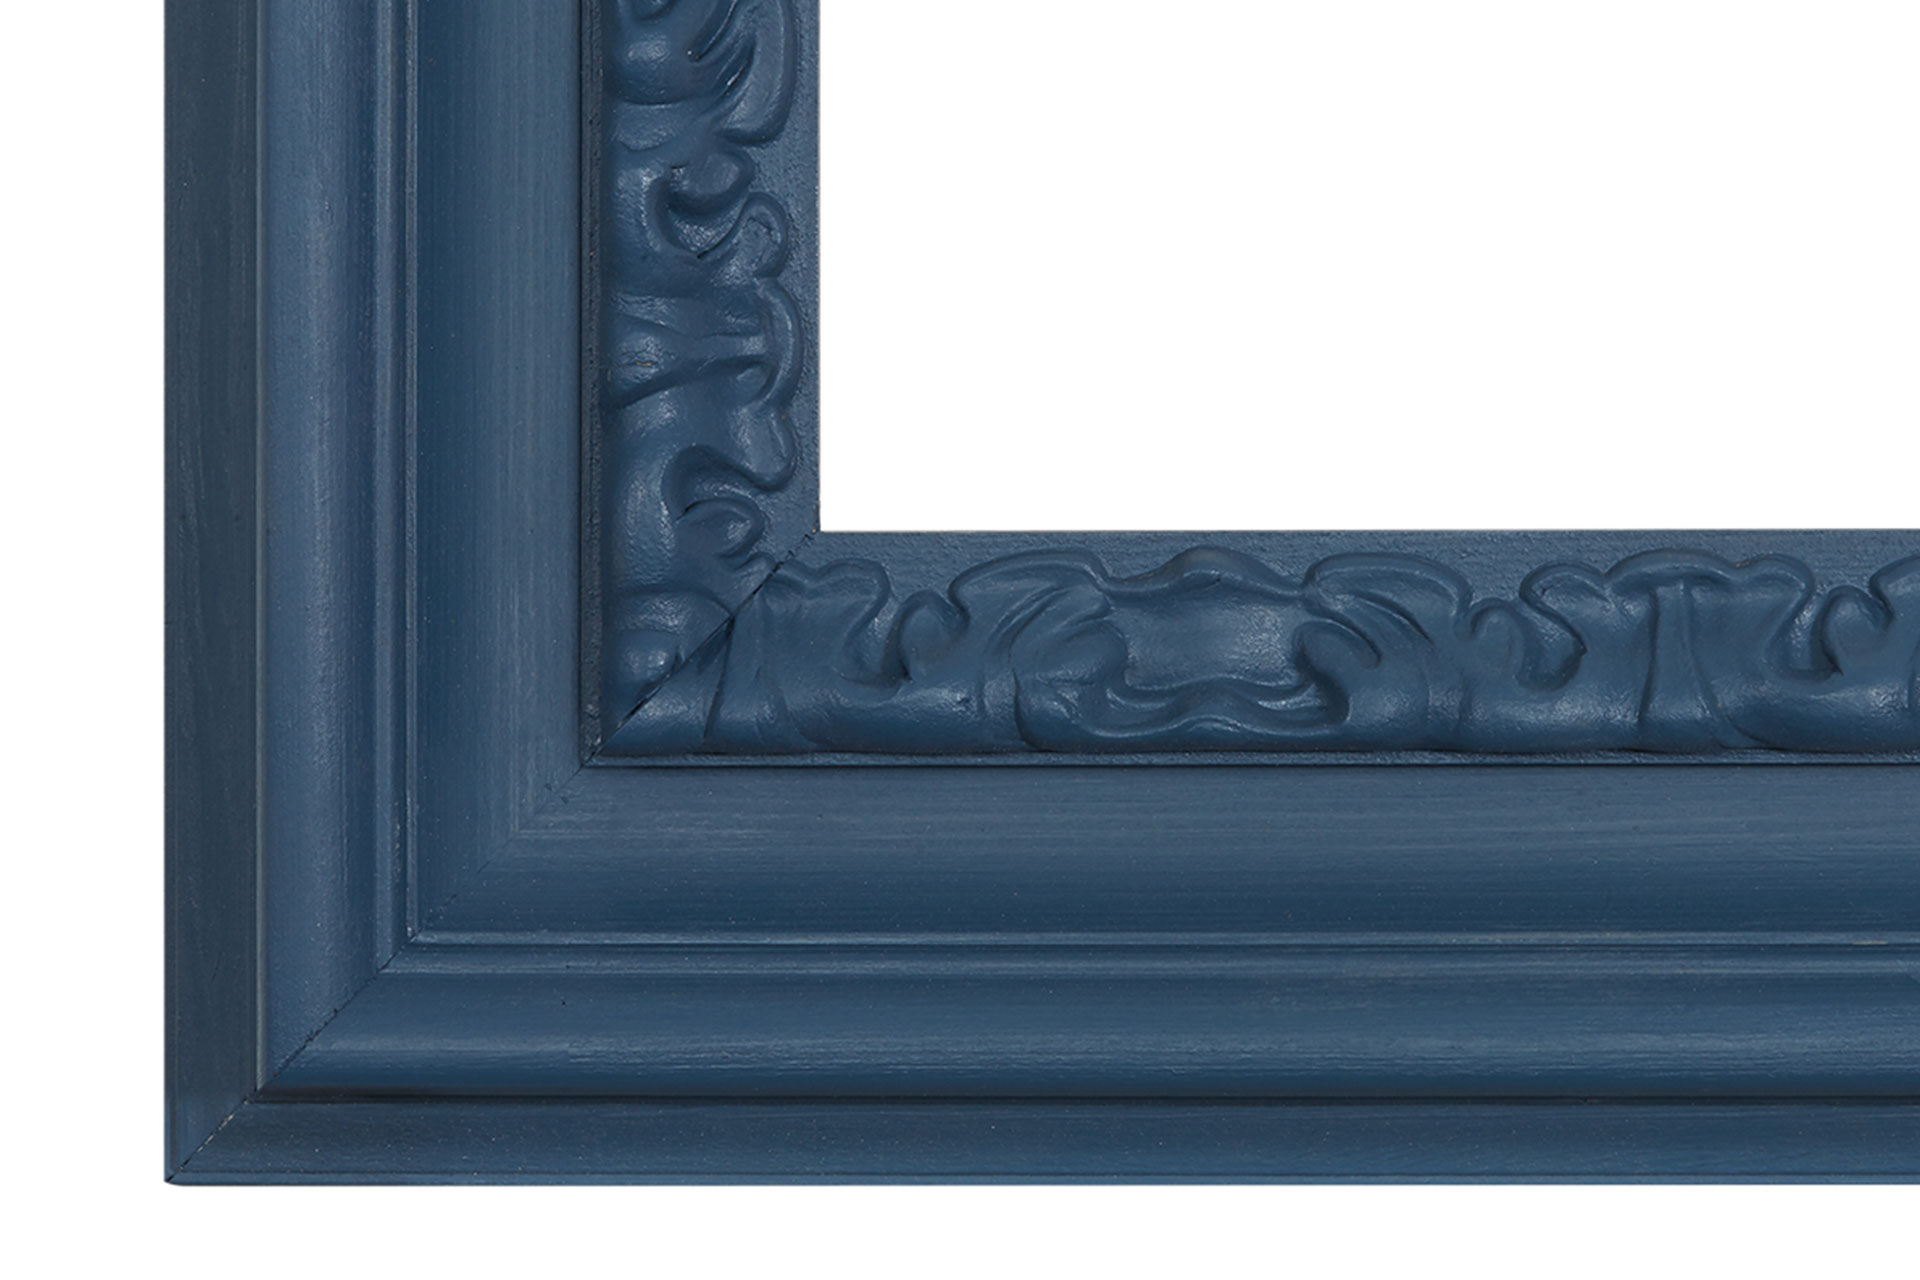 Wandspiegel Modell Landshut, Design/Farbe: Blue, Spiegel, Form: rechteckig, Material: Holz, Raum: Innenbereich, Style: modern, Herstellung: by ASR-Rahmendesign, Produktkategorie: Vintage, Ausschnitt